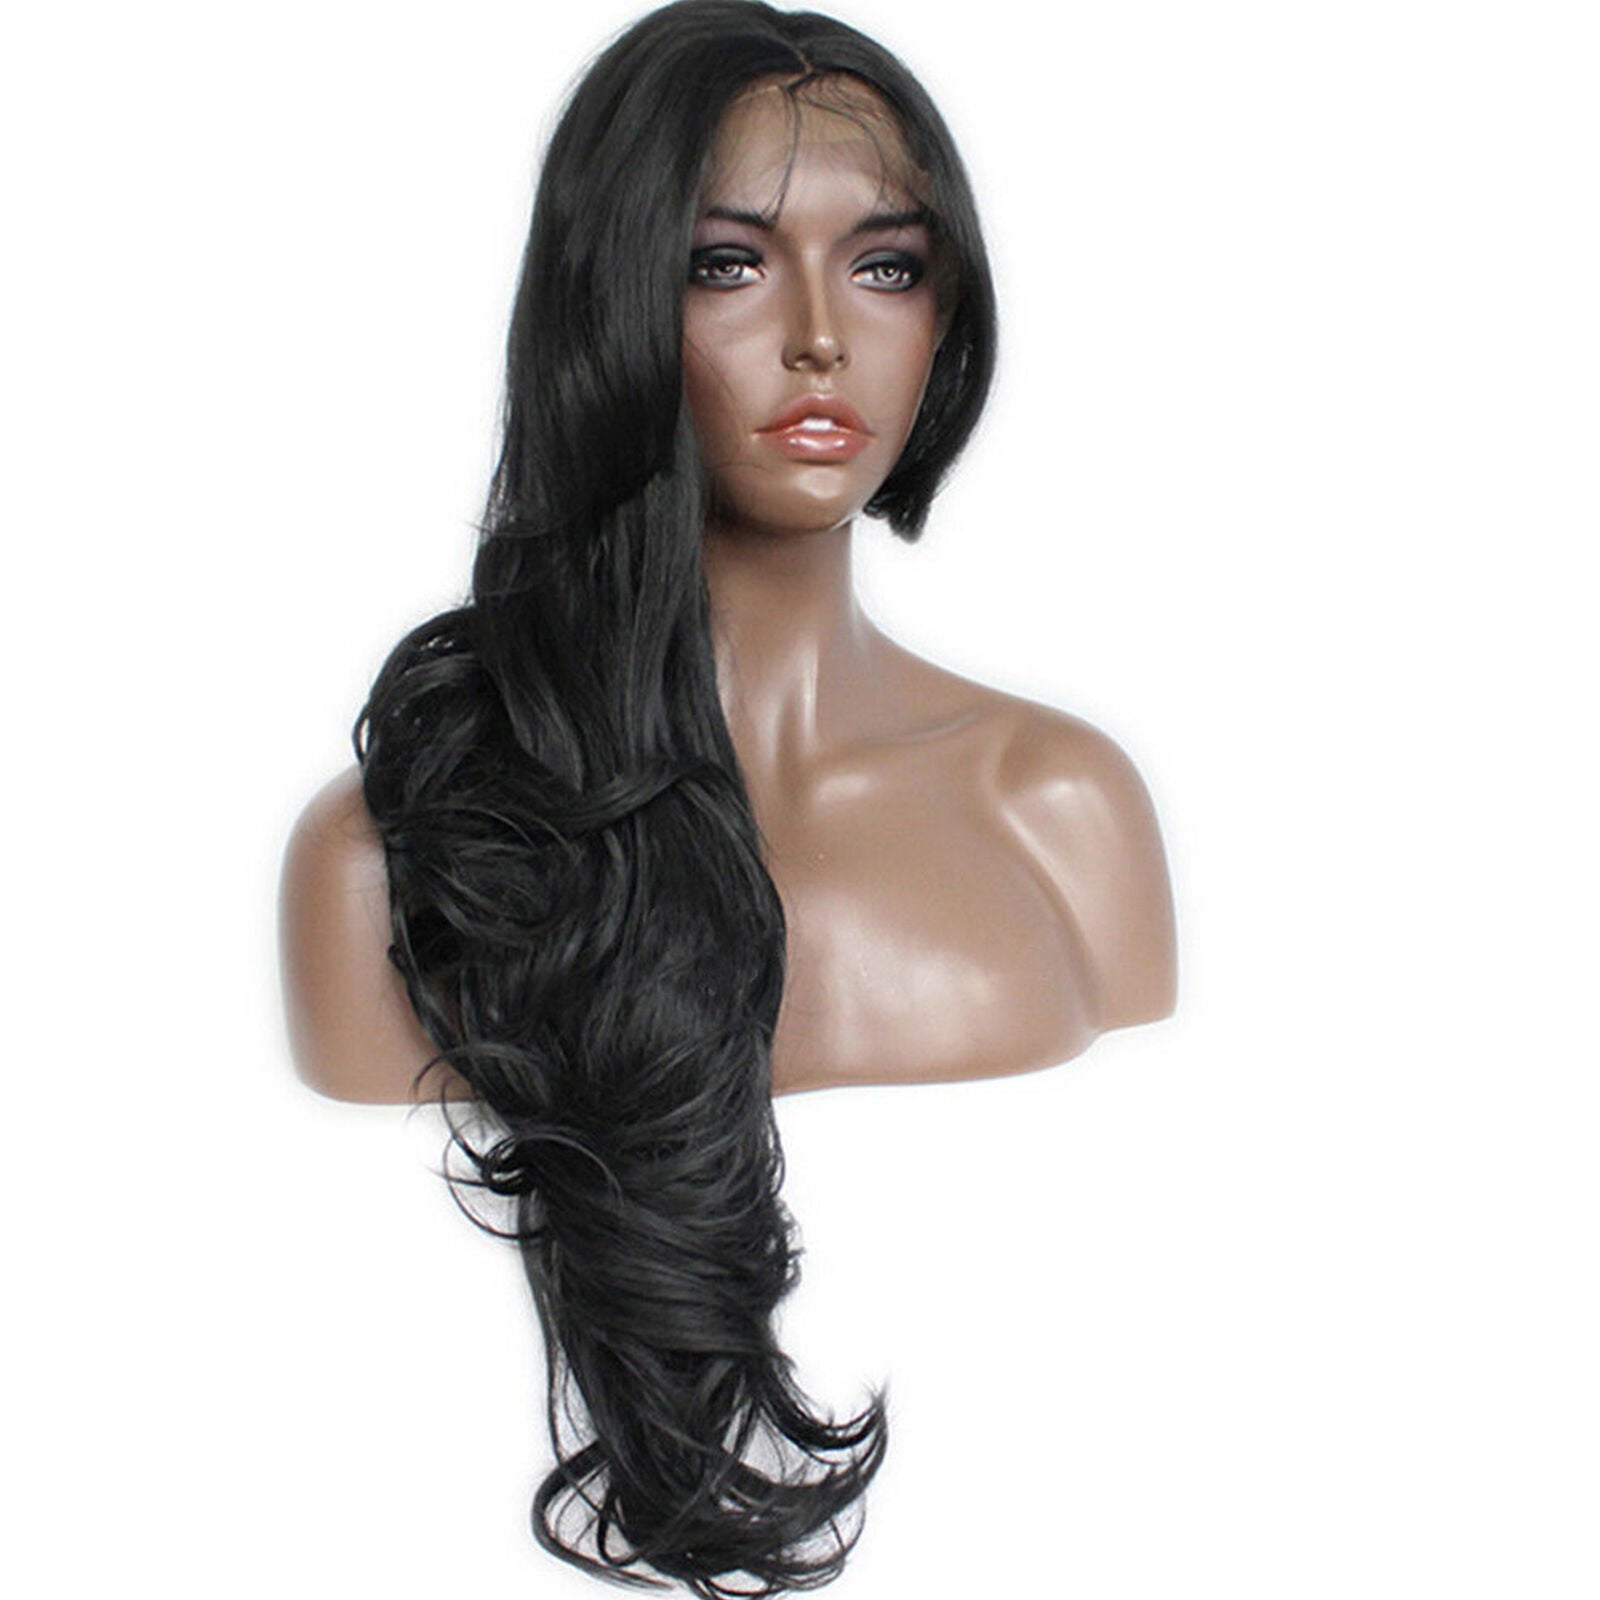 Women's Black Synthetic Lace Front Wig Long Hair Body Wavy Glueless Full Wigs